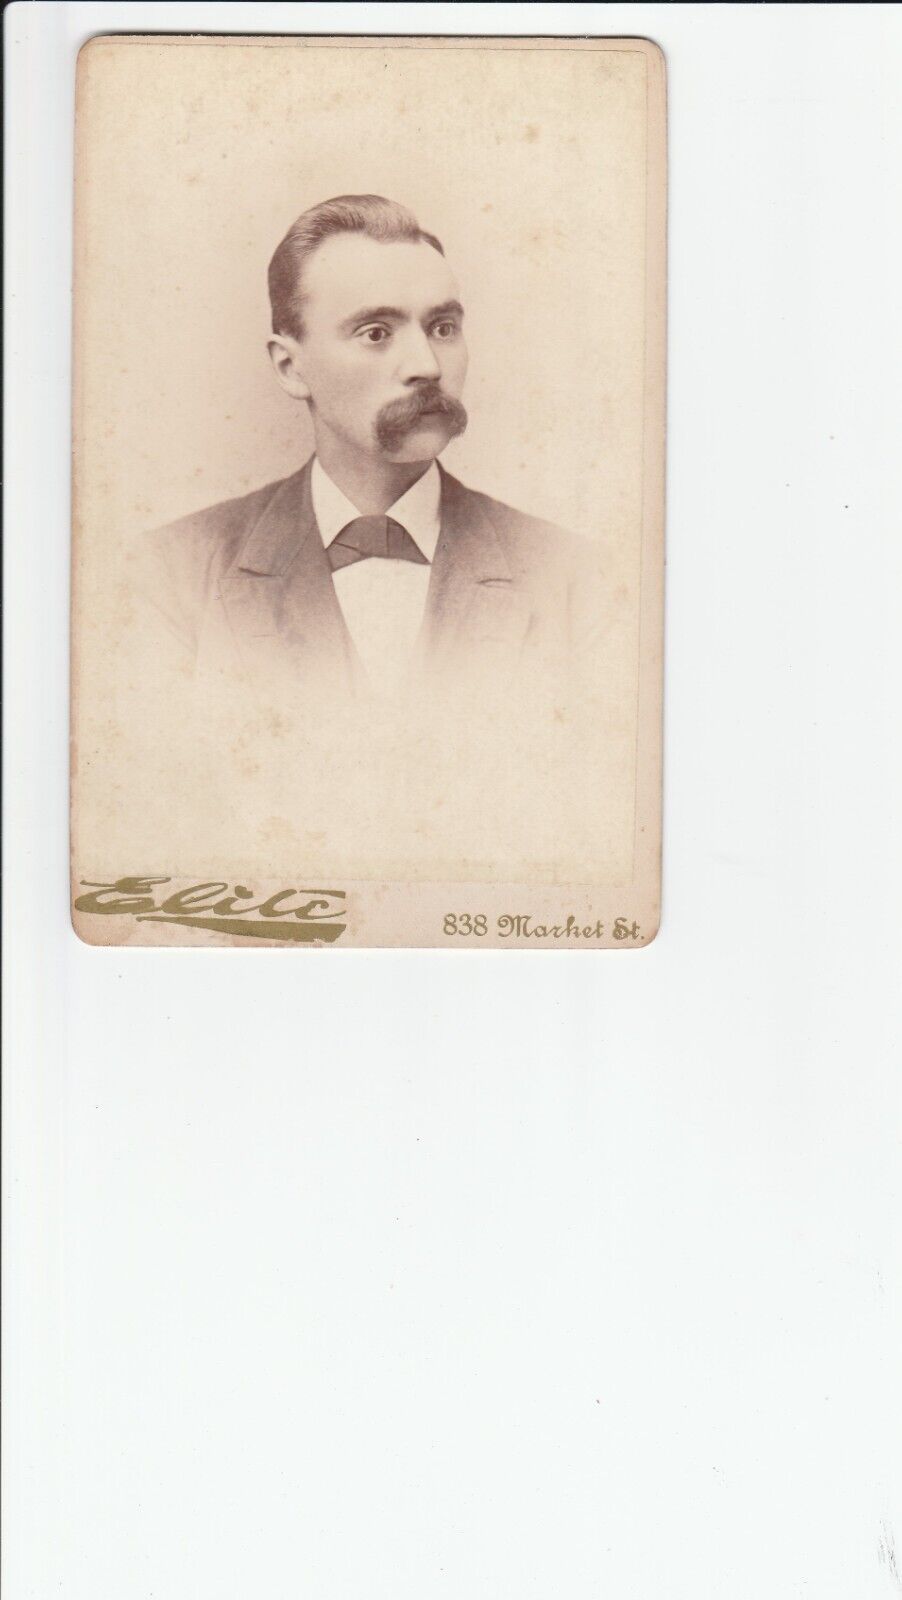 CABINET CARD GREAT AD VICTORIAN GENTLEMAN FULL WALRUS MUSTACHE 1880 S . F. CALIF